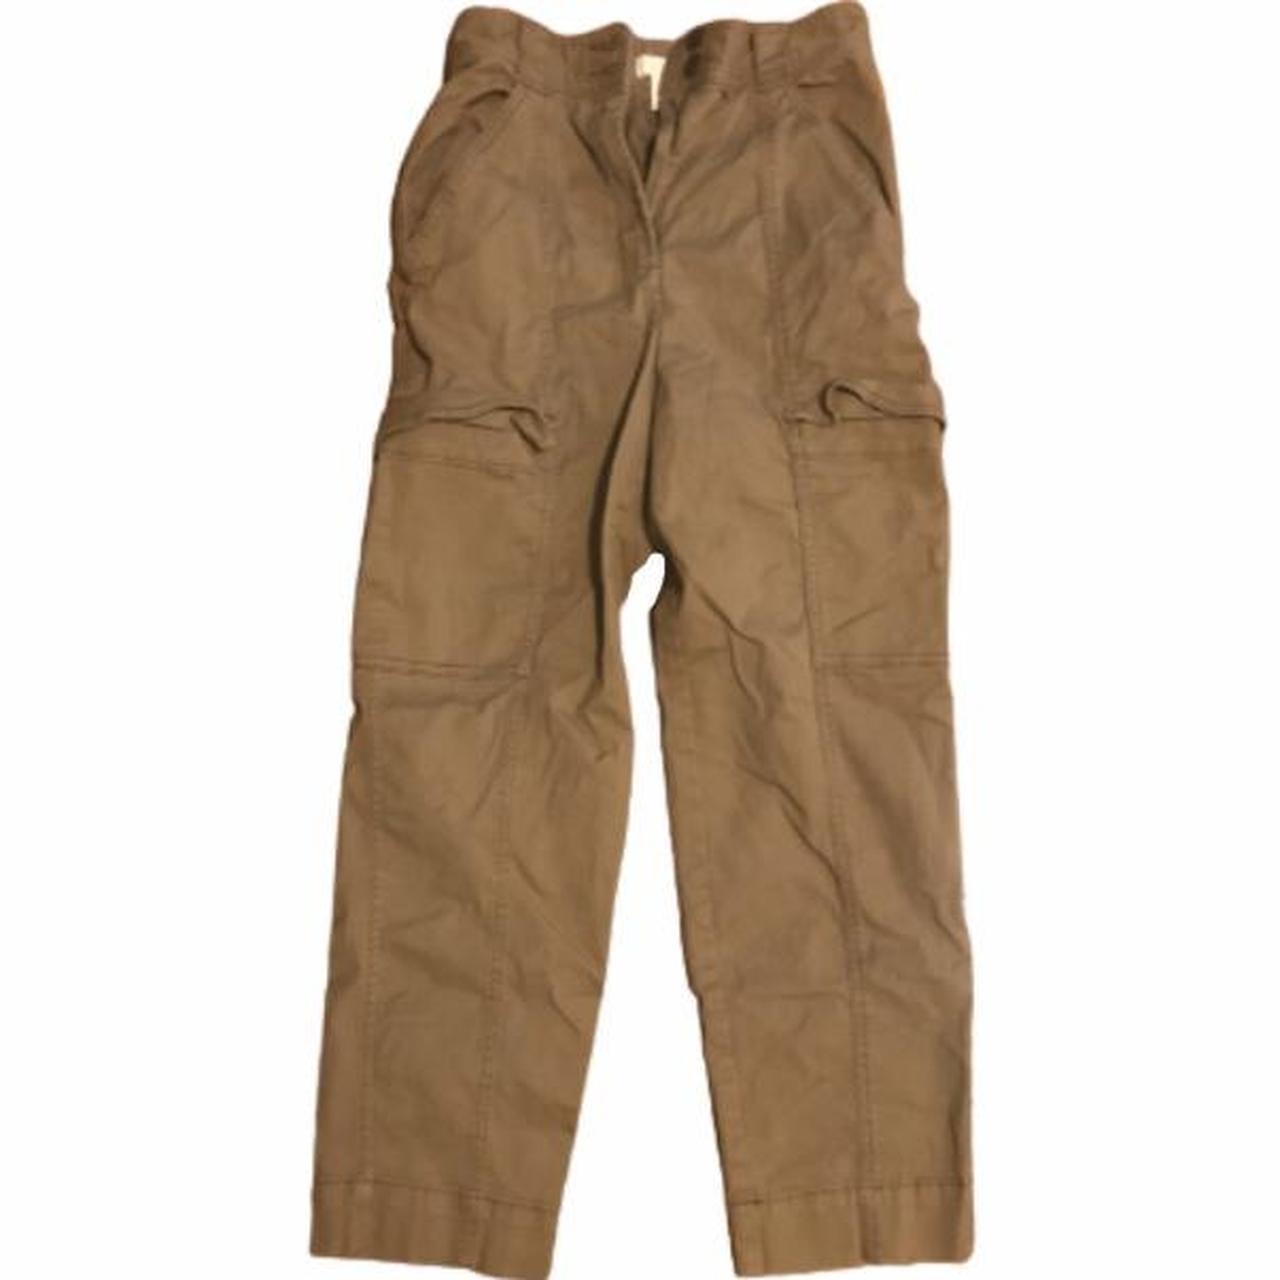 h&m high rise tan cargo pants fits small-medium - Depop